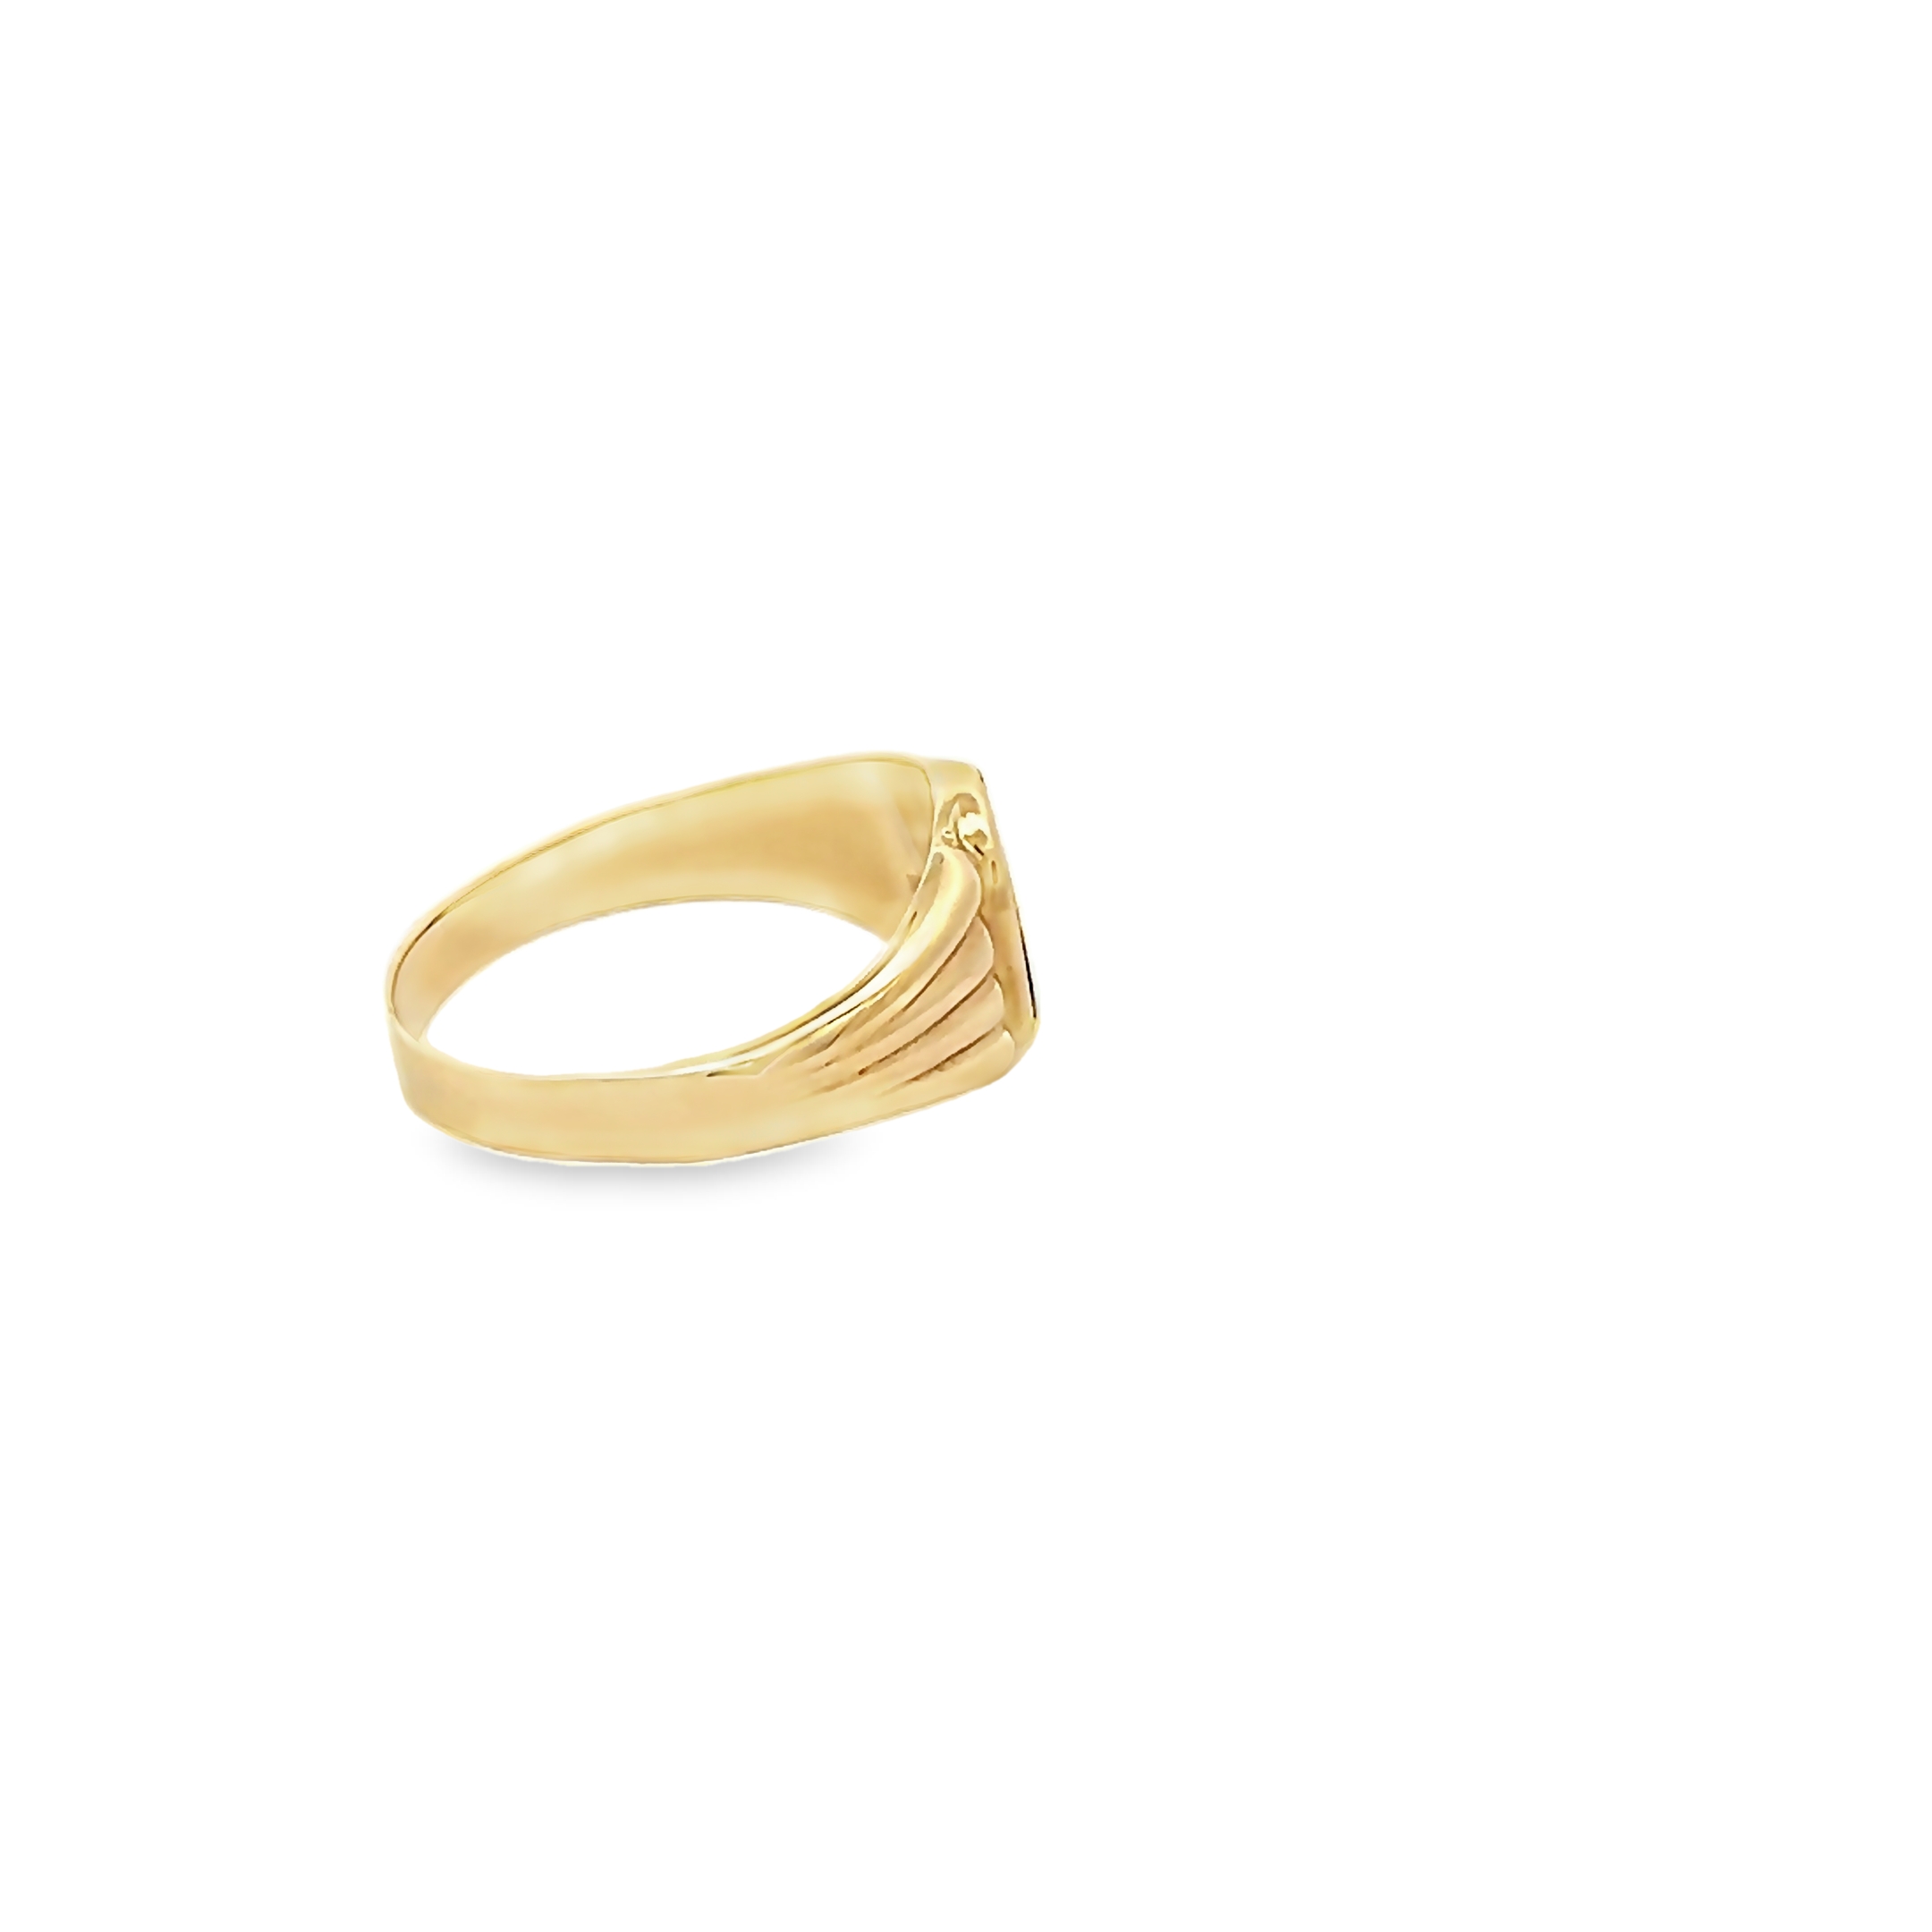 14k Yellow Gold Black Onyx Signet Ring